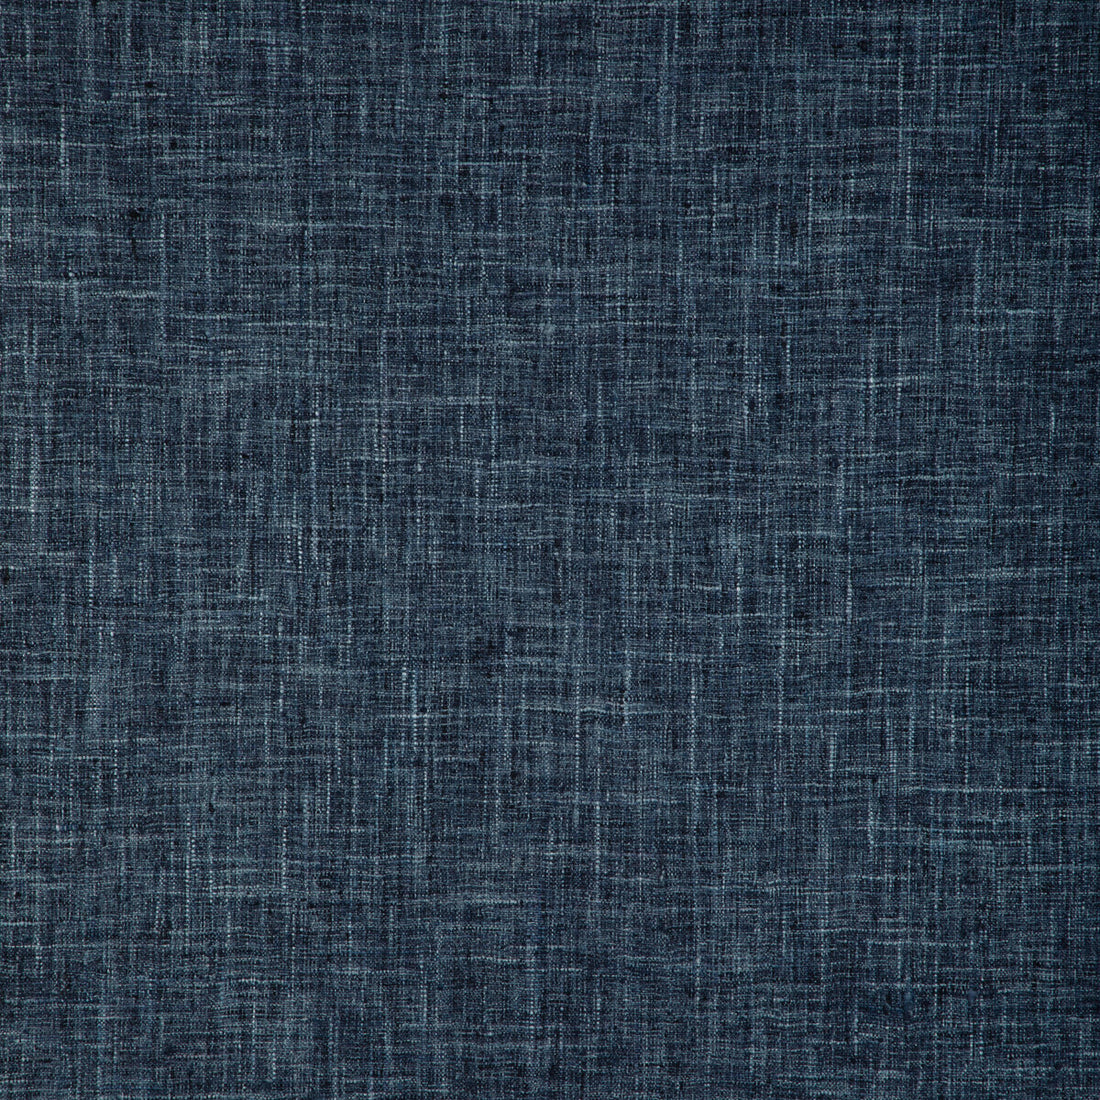 Kravet Smart fabric in 34983-50 color - pattern 34983.50.0 - by Kravet Smart